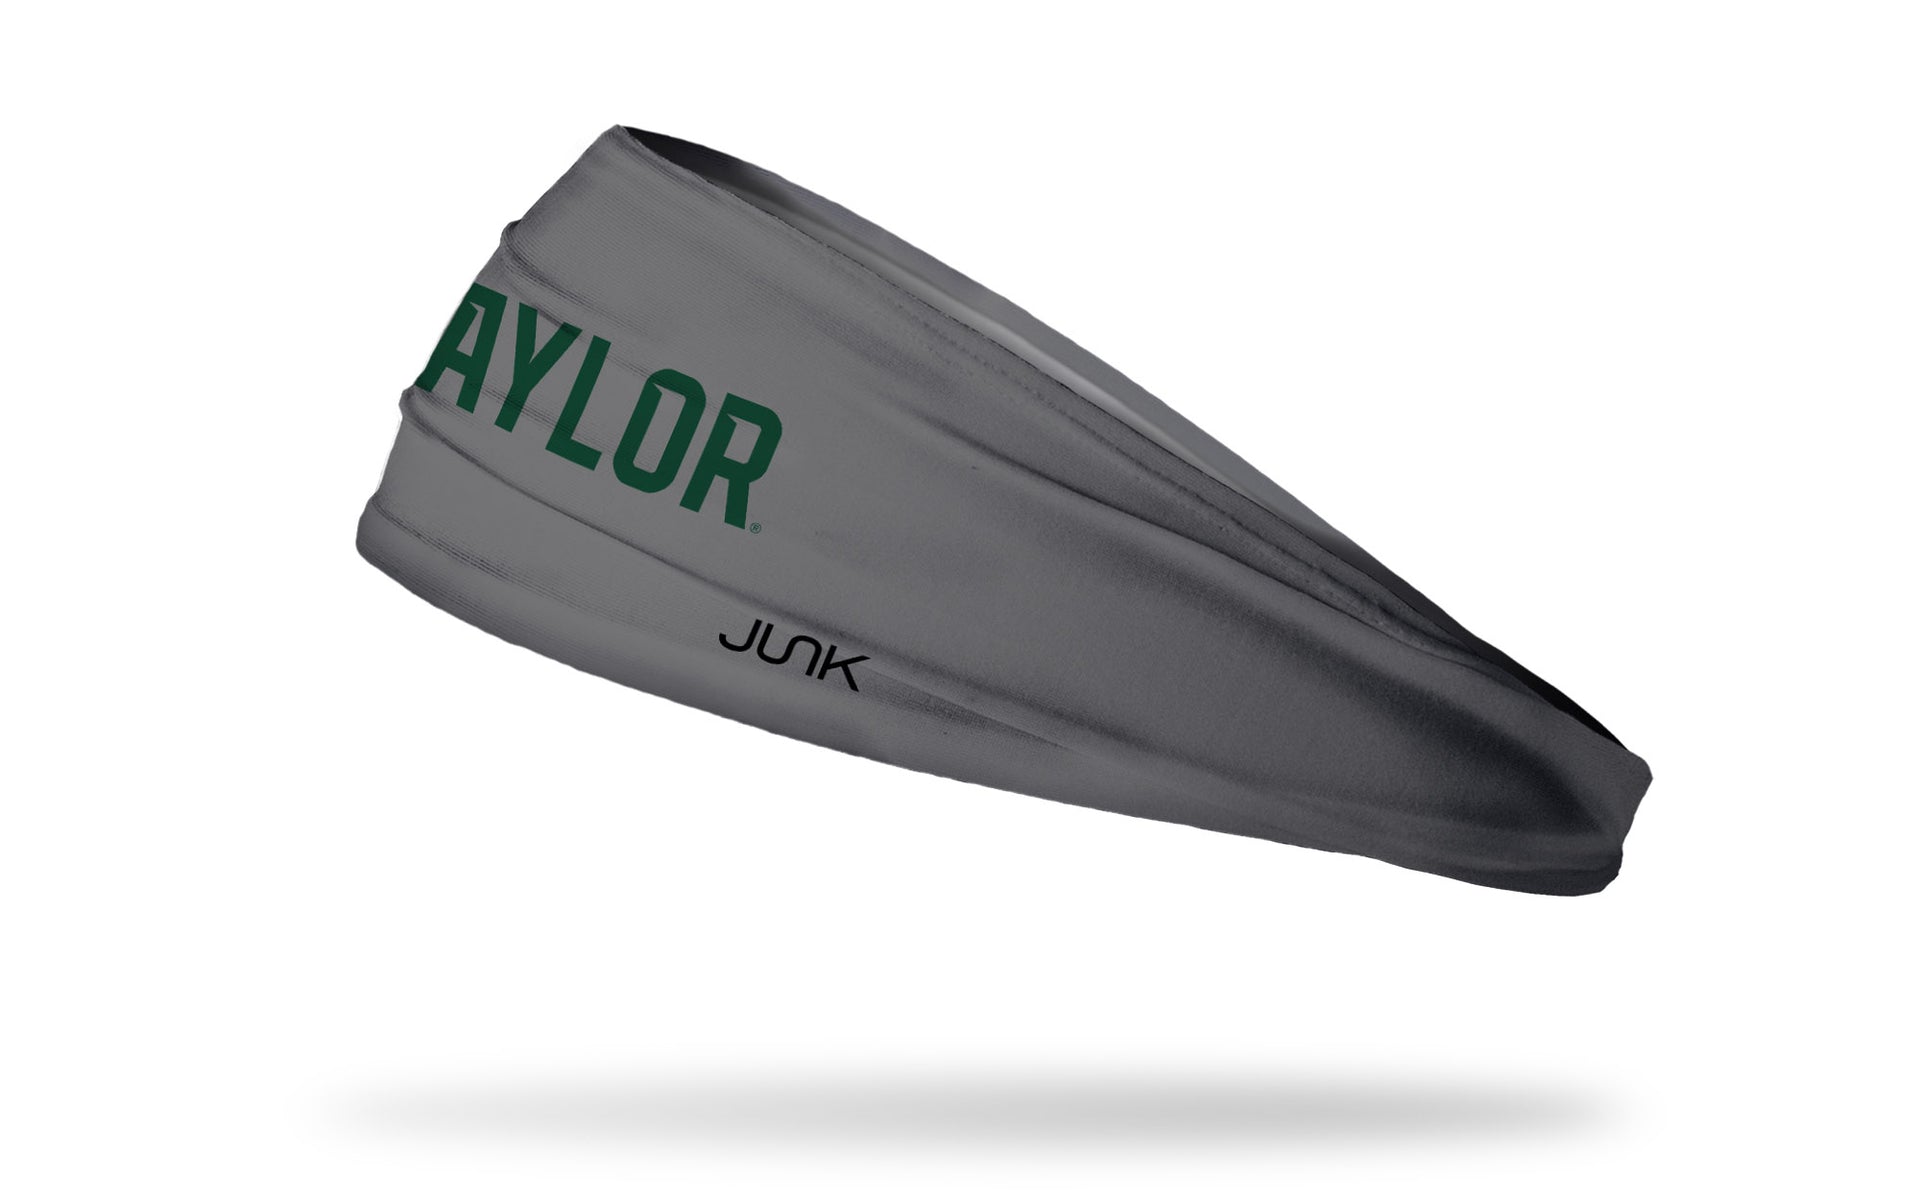 dark gray headband with Baylor University Baylor wordmark in green